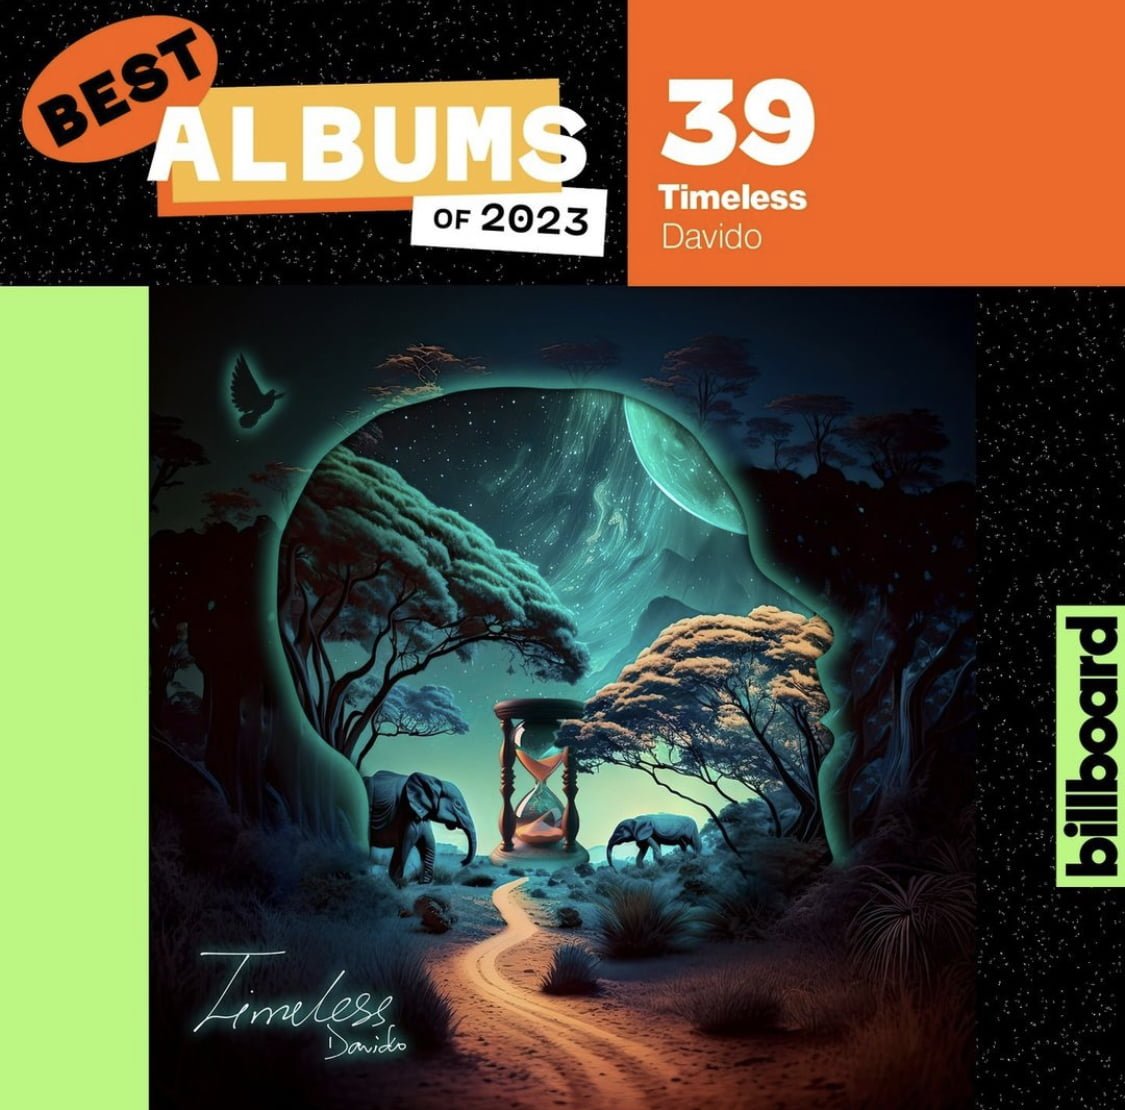 Davido’s “Timeless” Album Makes Billboard’s Top 50 Best Albums of 2023